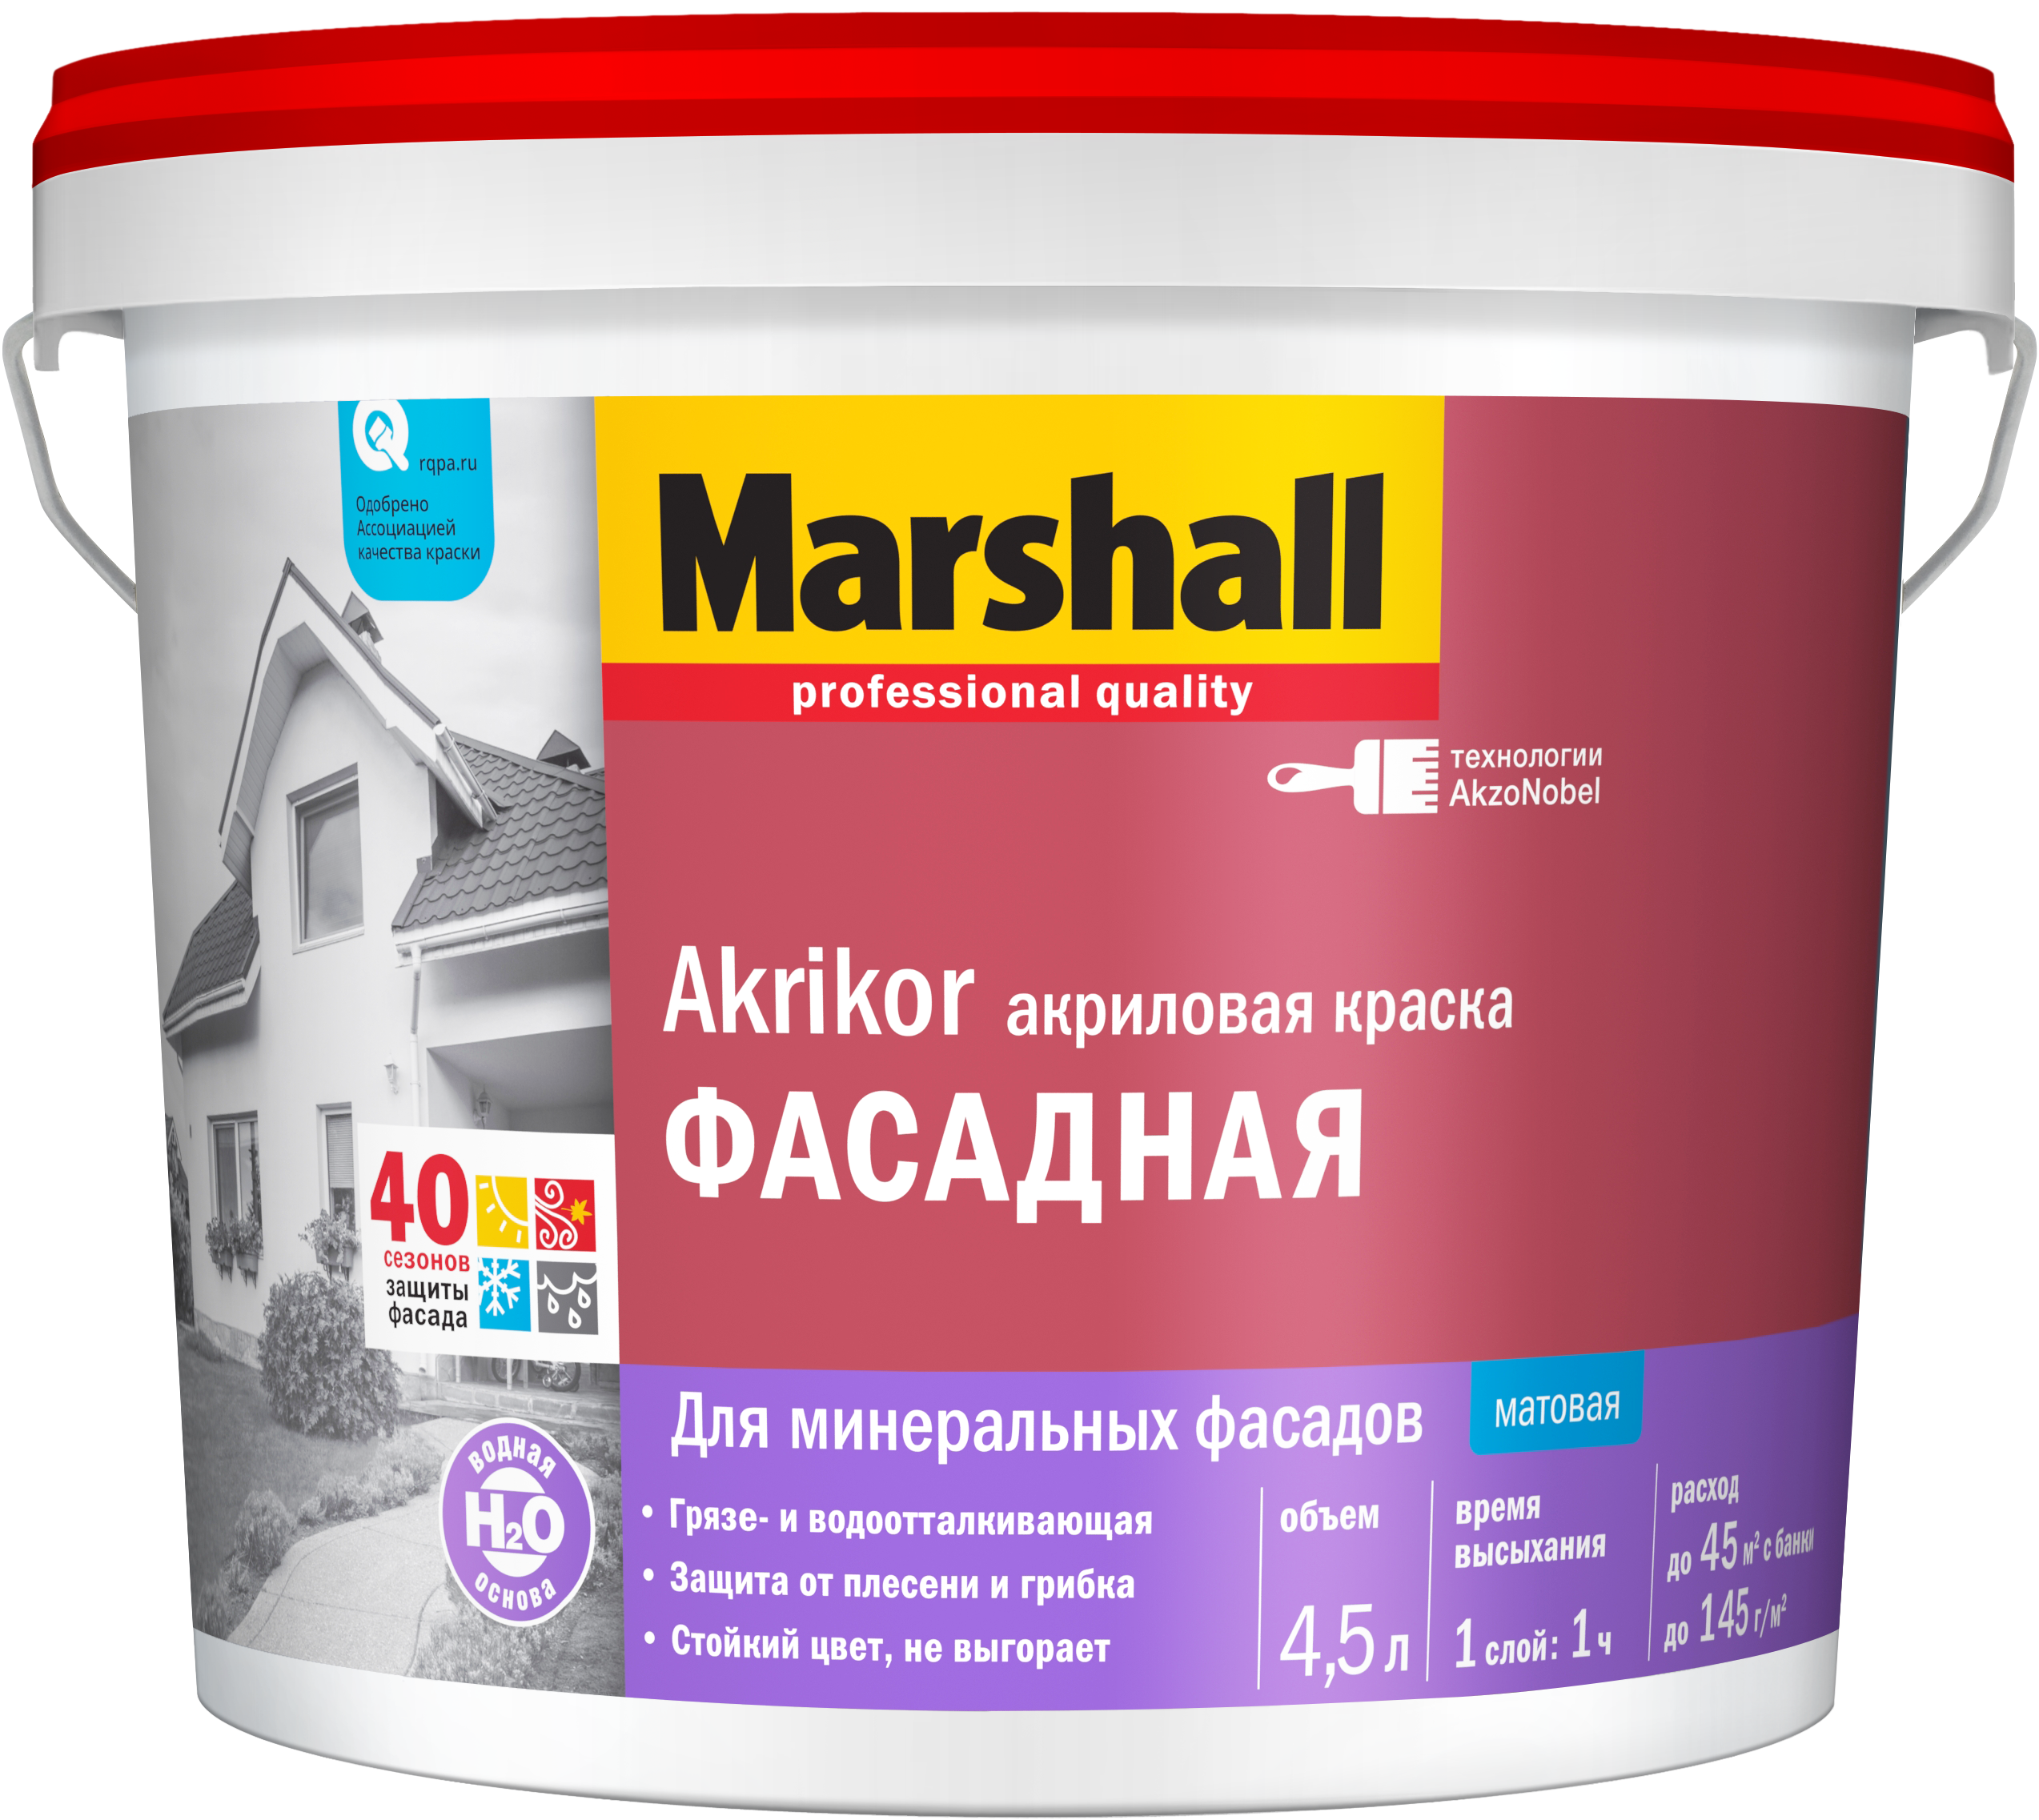 Краска фасадная Маршал Акрикор/Marshall Akrikor купить Коломна, цена, отзывы. Фото N2